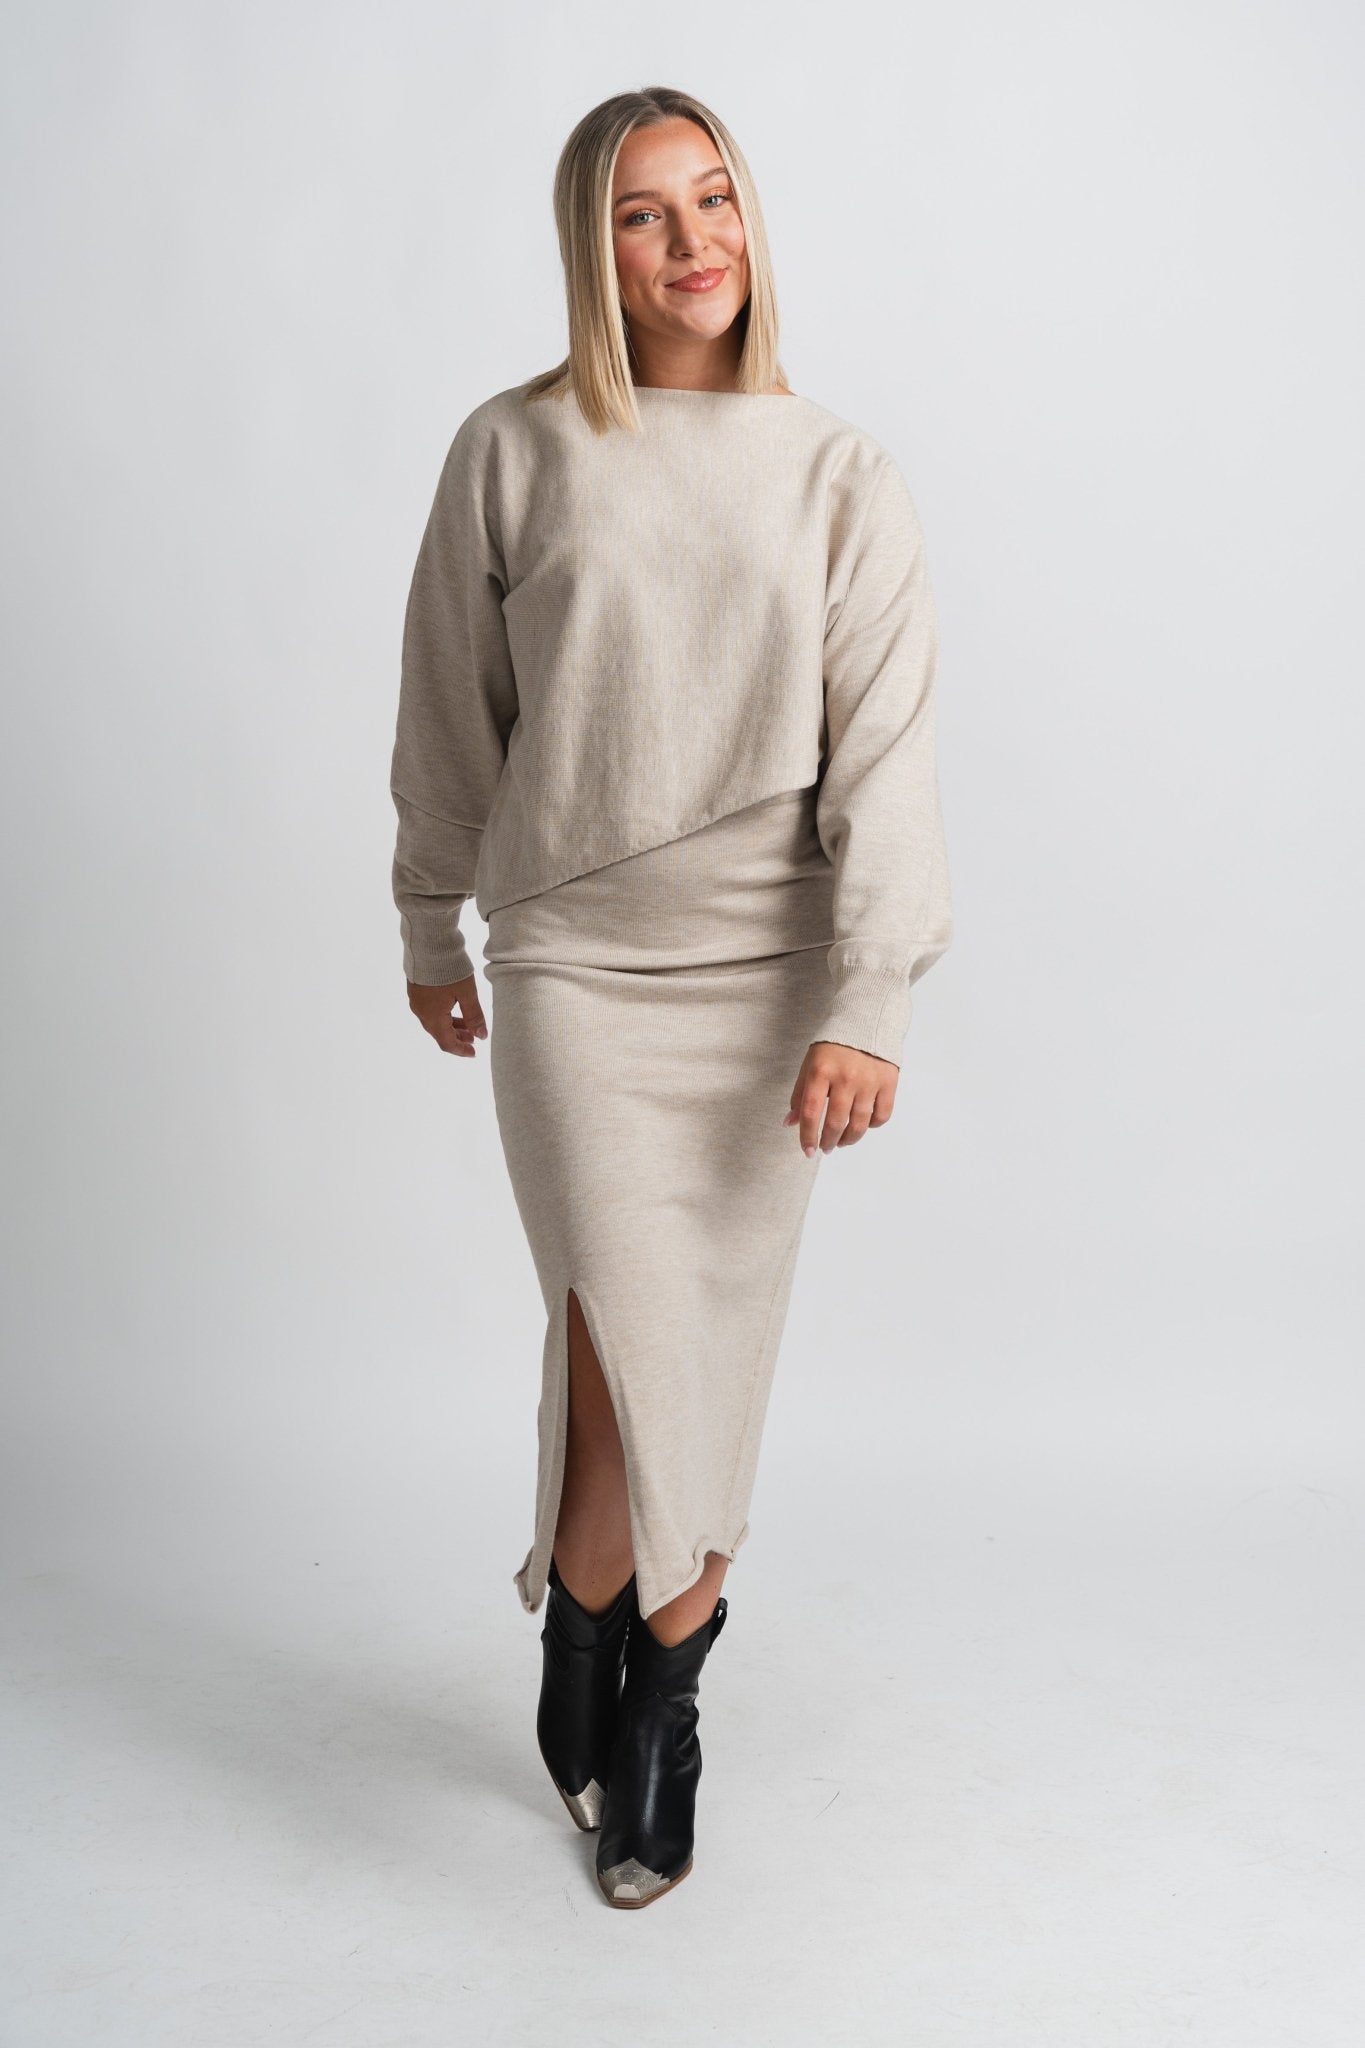 Sweater midi skirt beige | Lush Fashion Lounge: boutique fashion skirts, affordable boutique skirts, cute affordable skirts